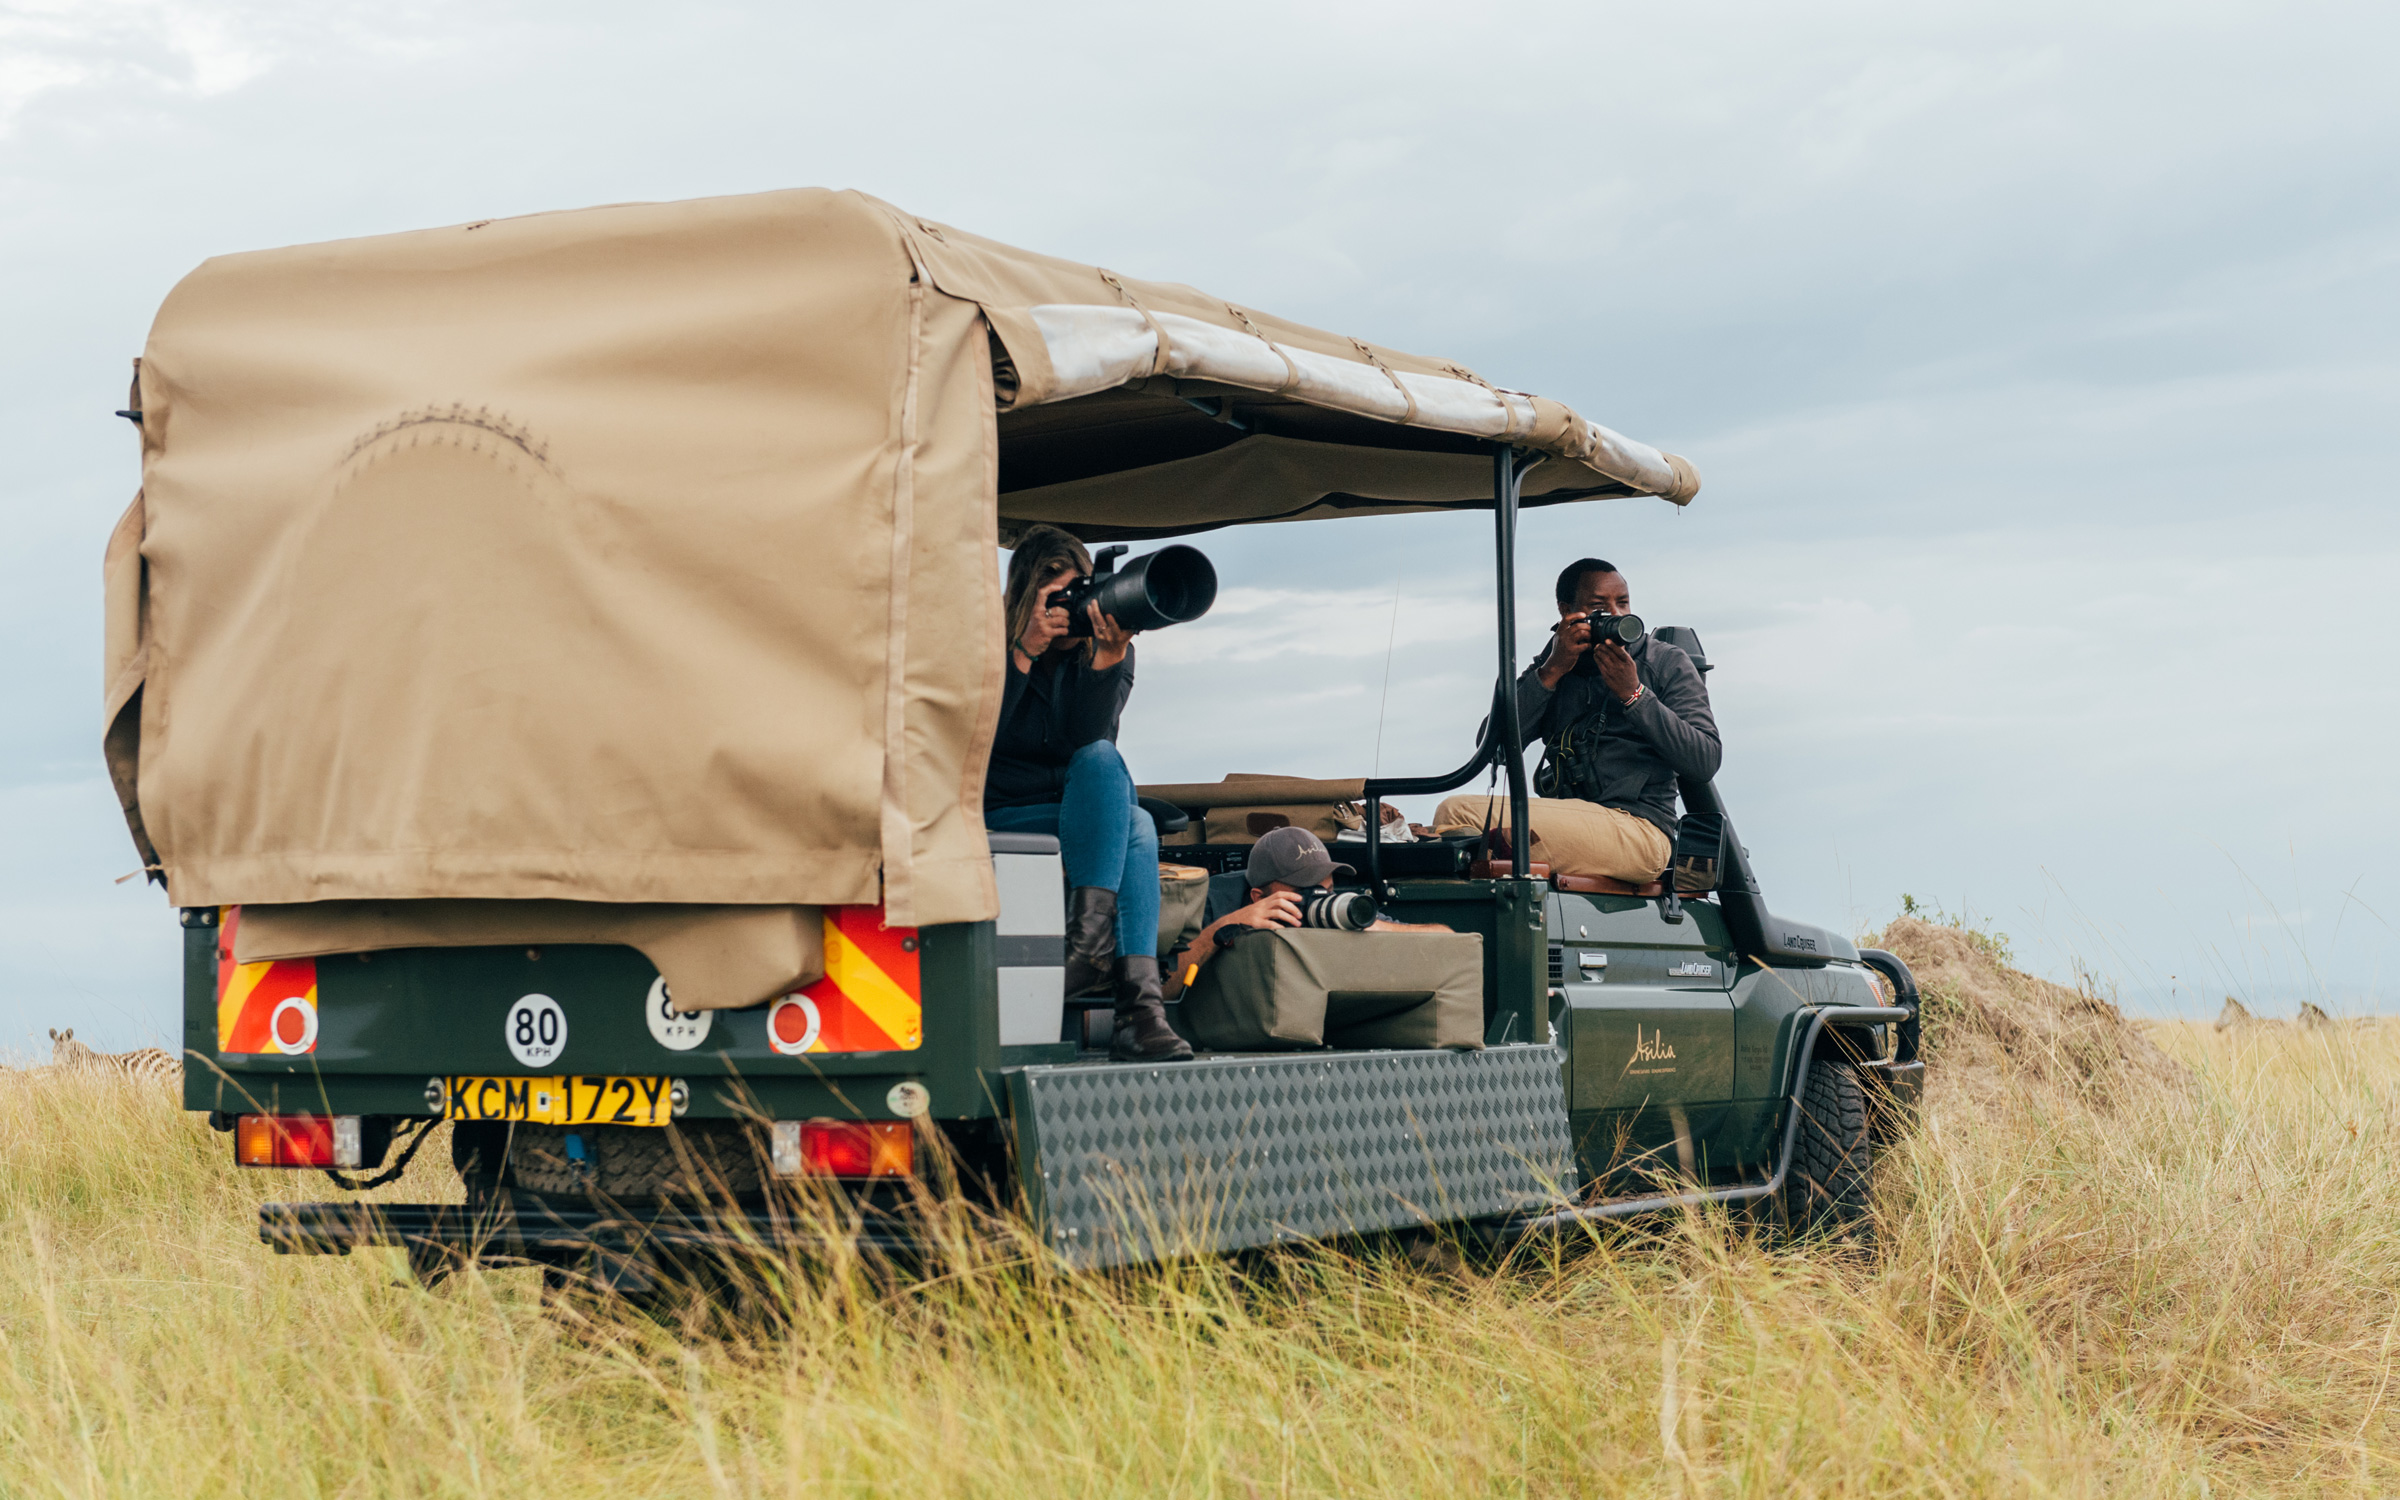 safari vehicle on safari